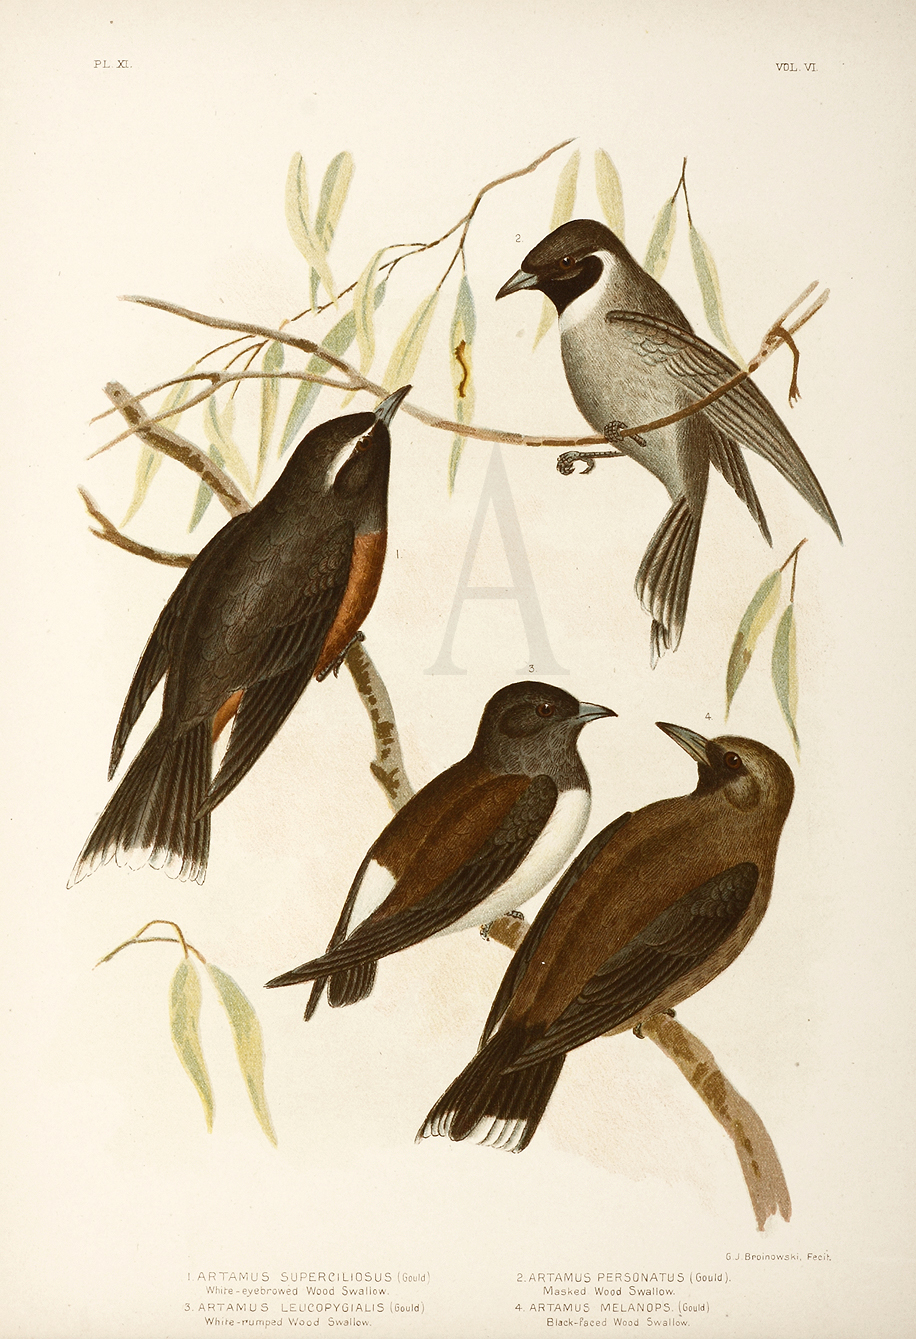 1. Artamus Superciliosus. White-eyebrowed Wood Swallow. 2. Artamus Personatus. Masked Wood Swallow. 3. Artamus Leucopygialis. White-rumped Wood Swallow. 4. Artamus Melanops. Black-faced Wood Swallow. - Antique Print from 1889